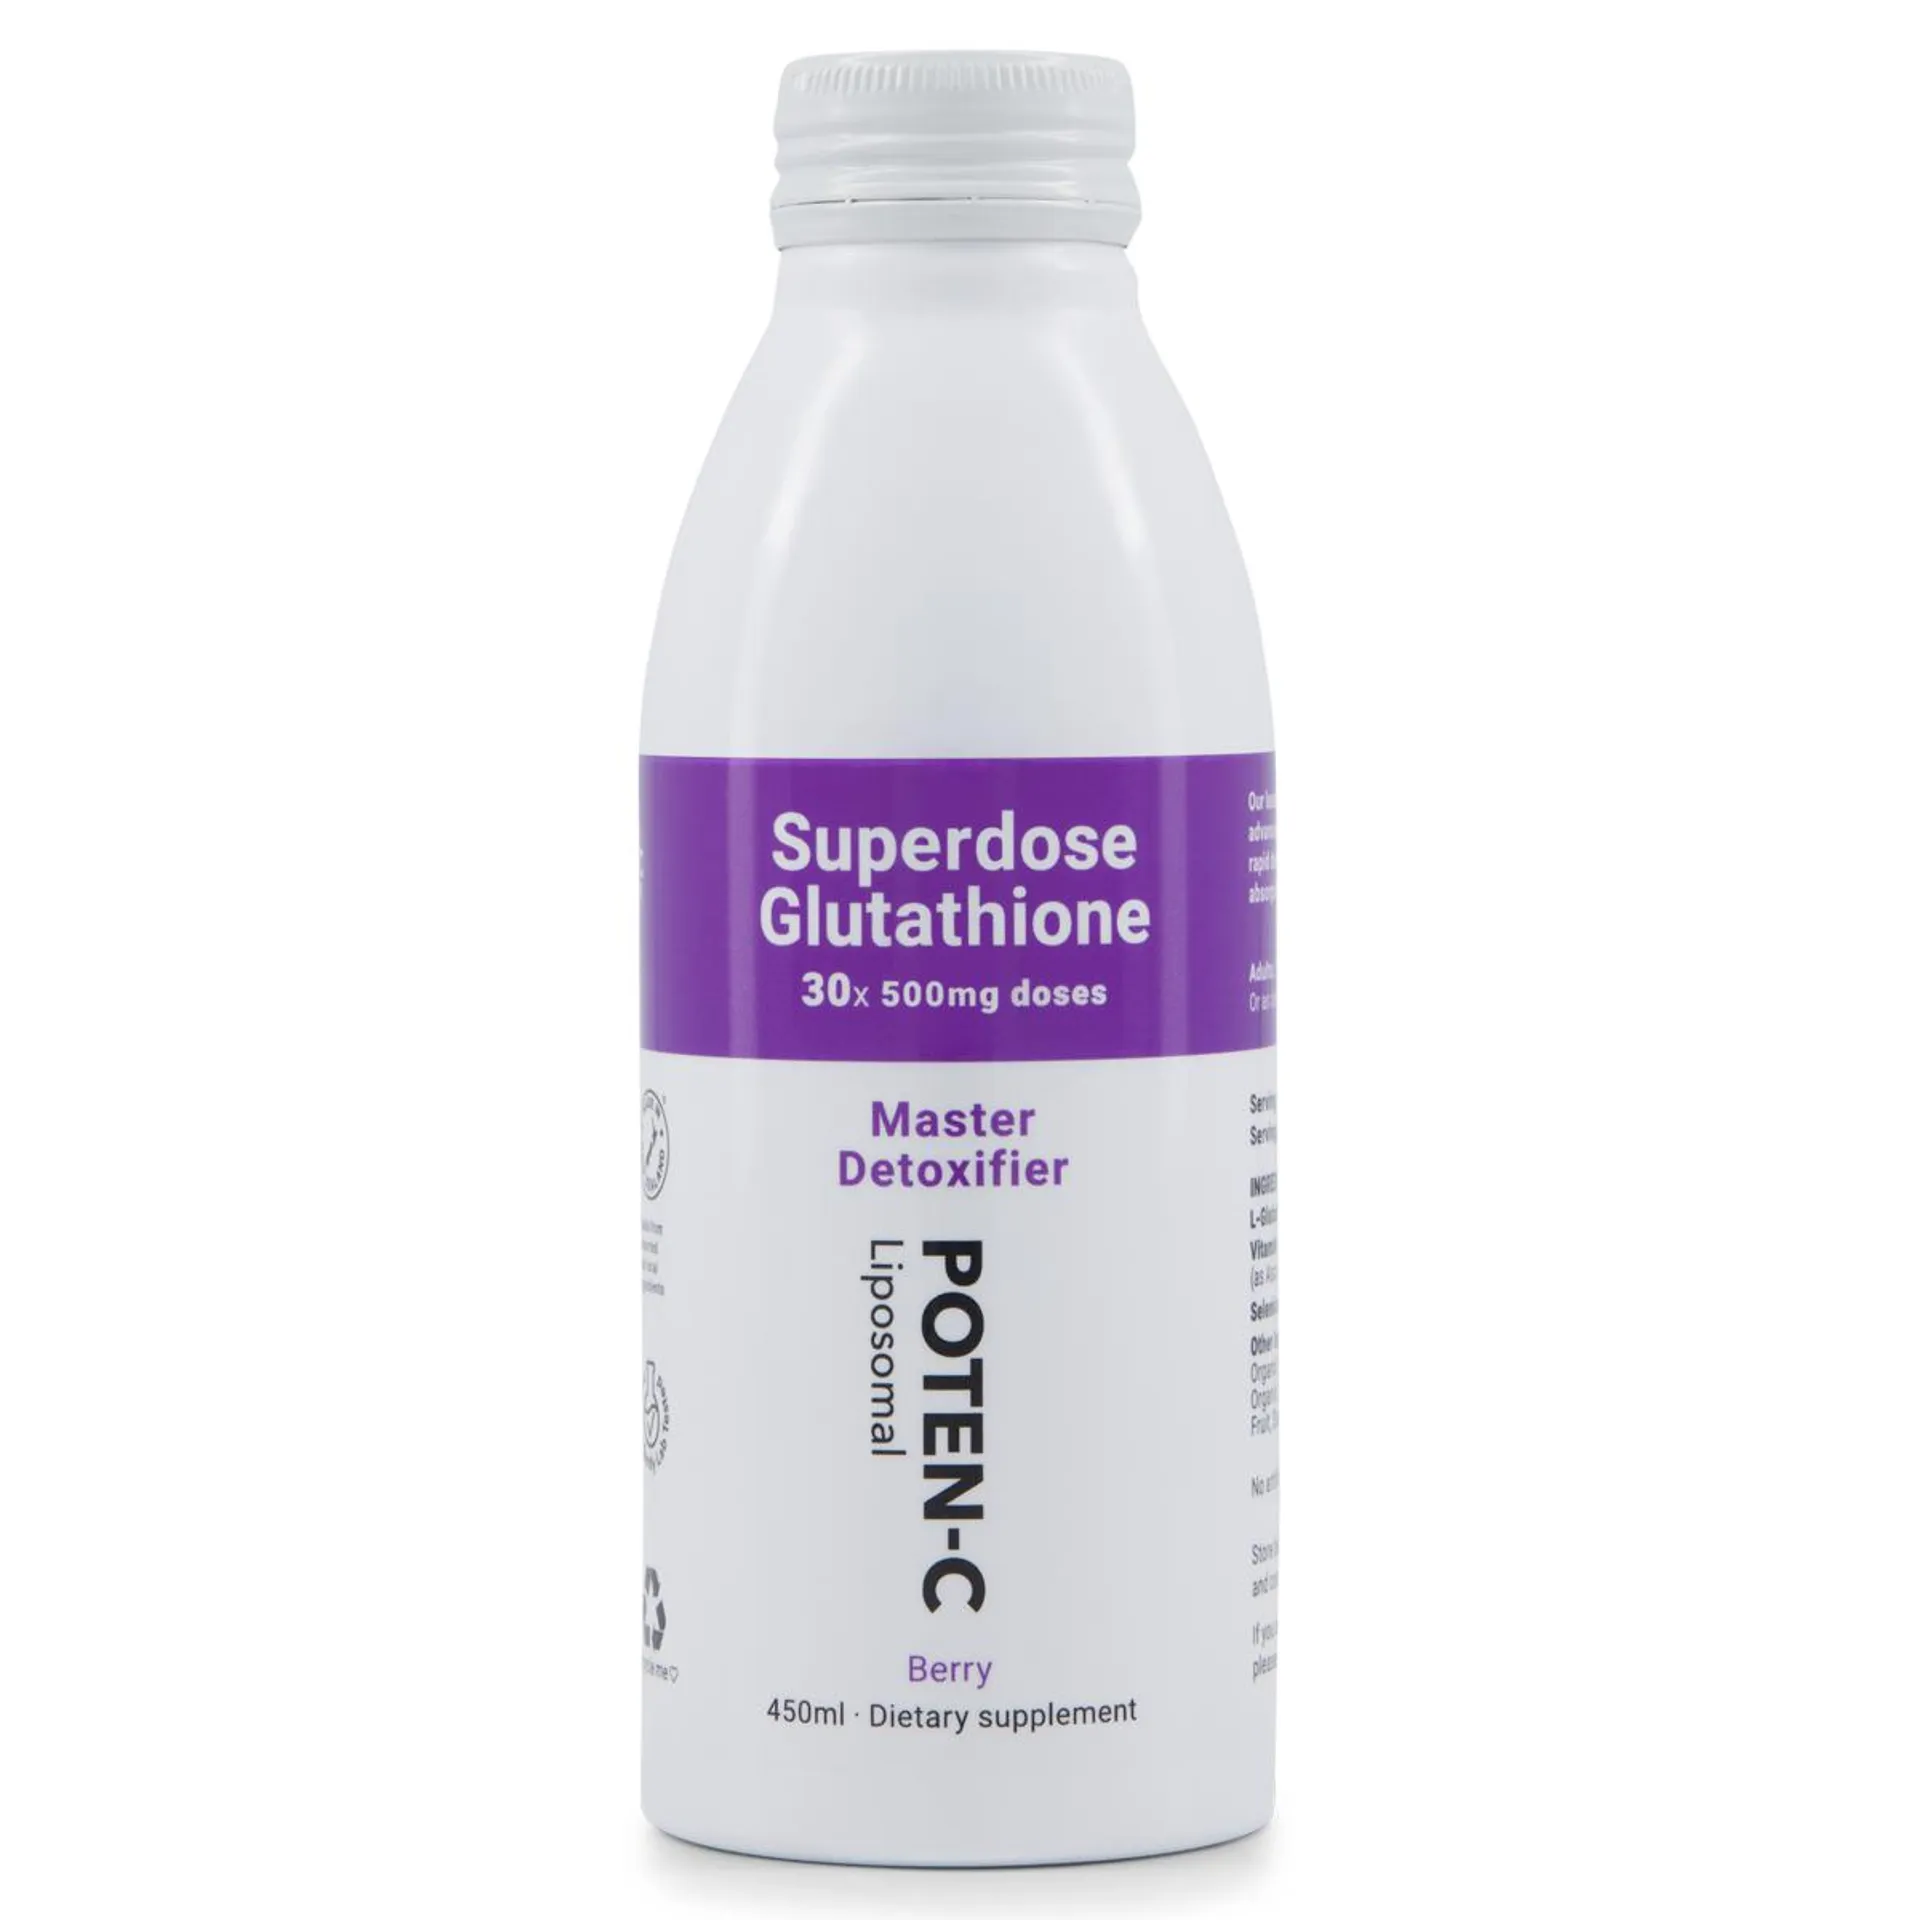 Poten-C Superdose Liposomal Glutathione - 30x 500mg Doses 450ml Berry + FREE Gift with Purchase (75ml 1000mg Liposomal Vitamin C)